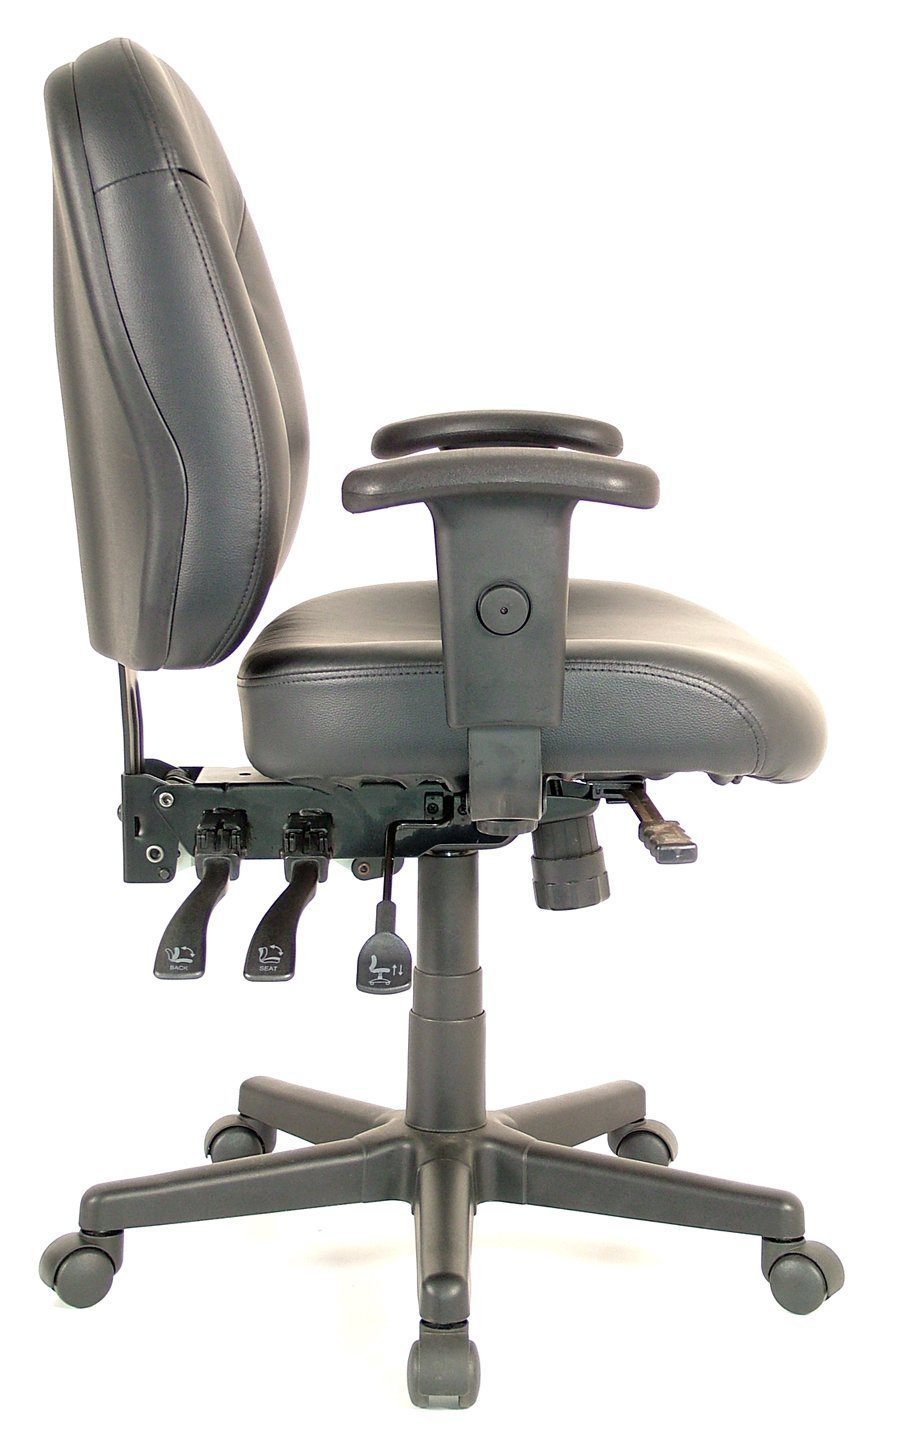 Eurotech Office Chair Eurotech 4x4le Chair